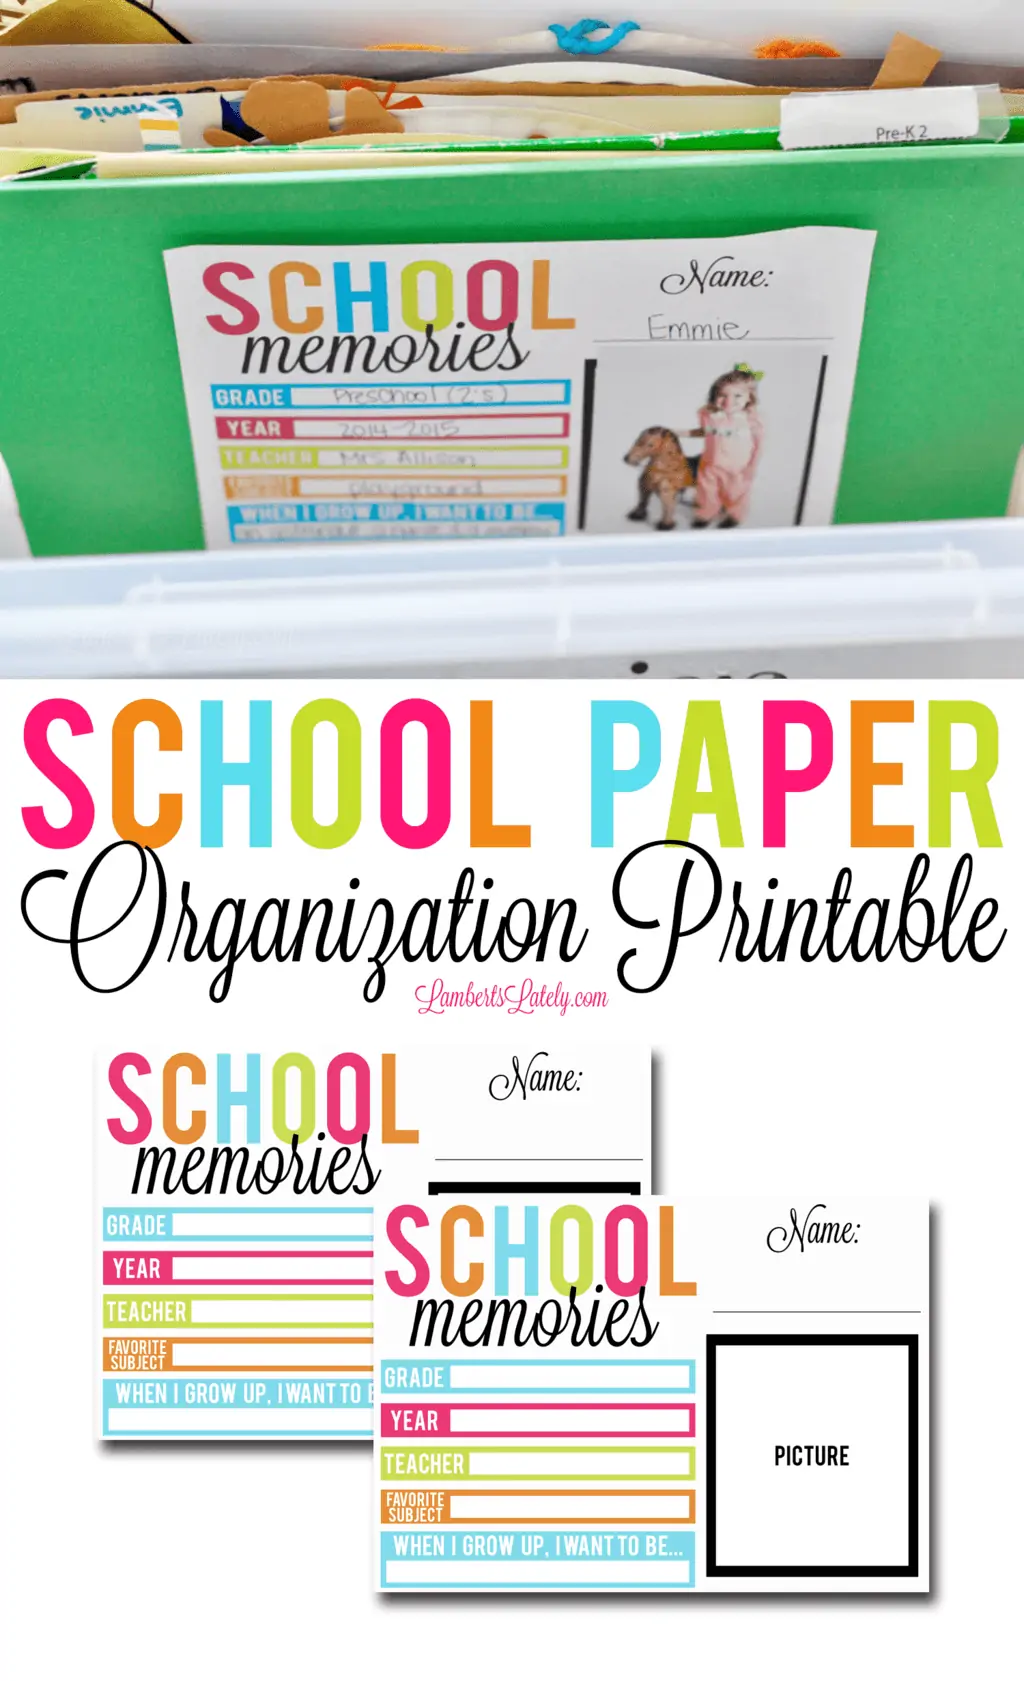 school paper organization printable.